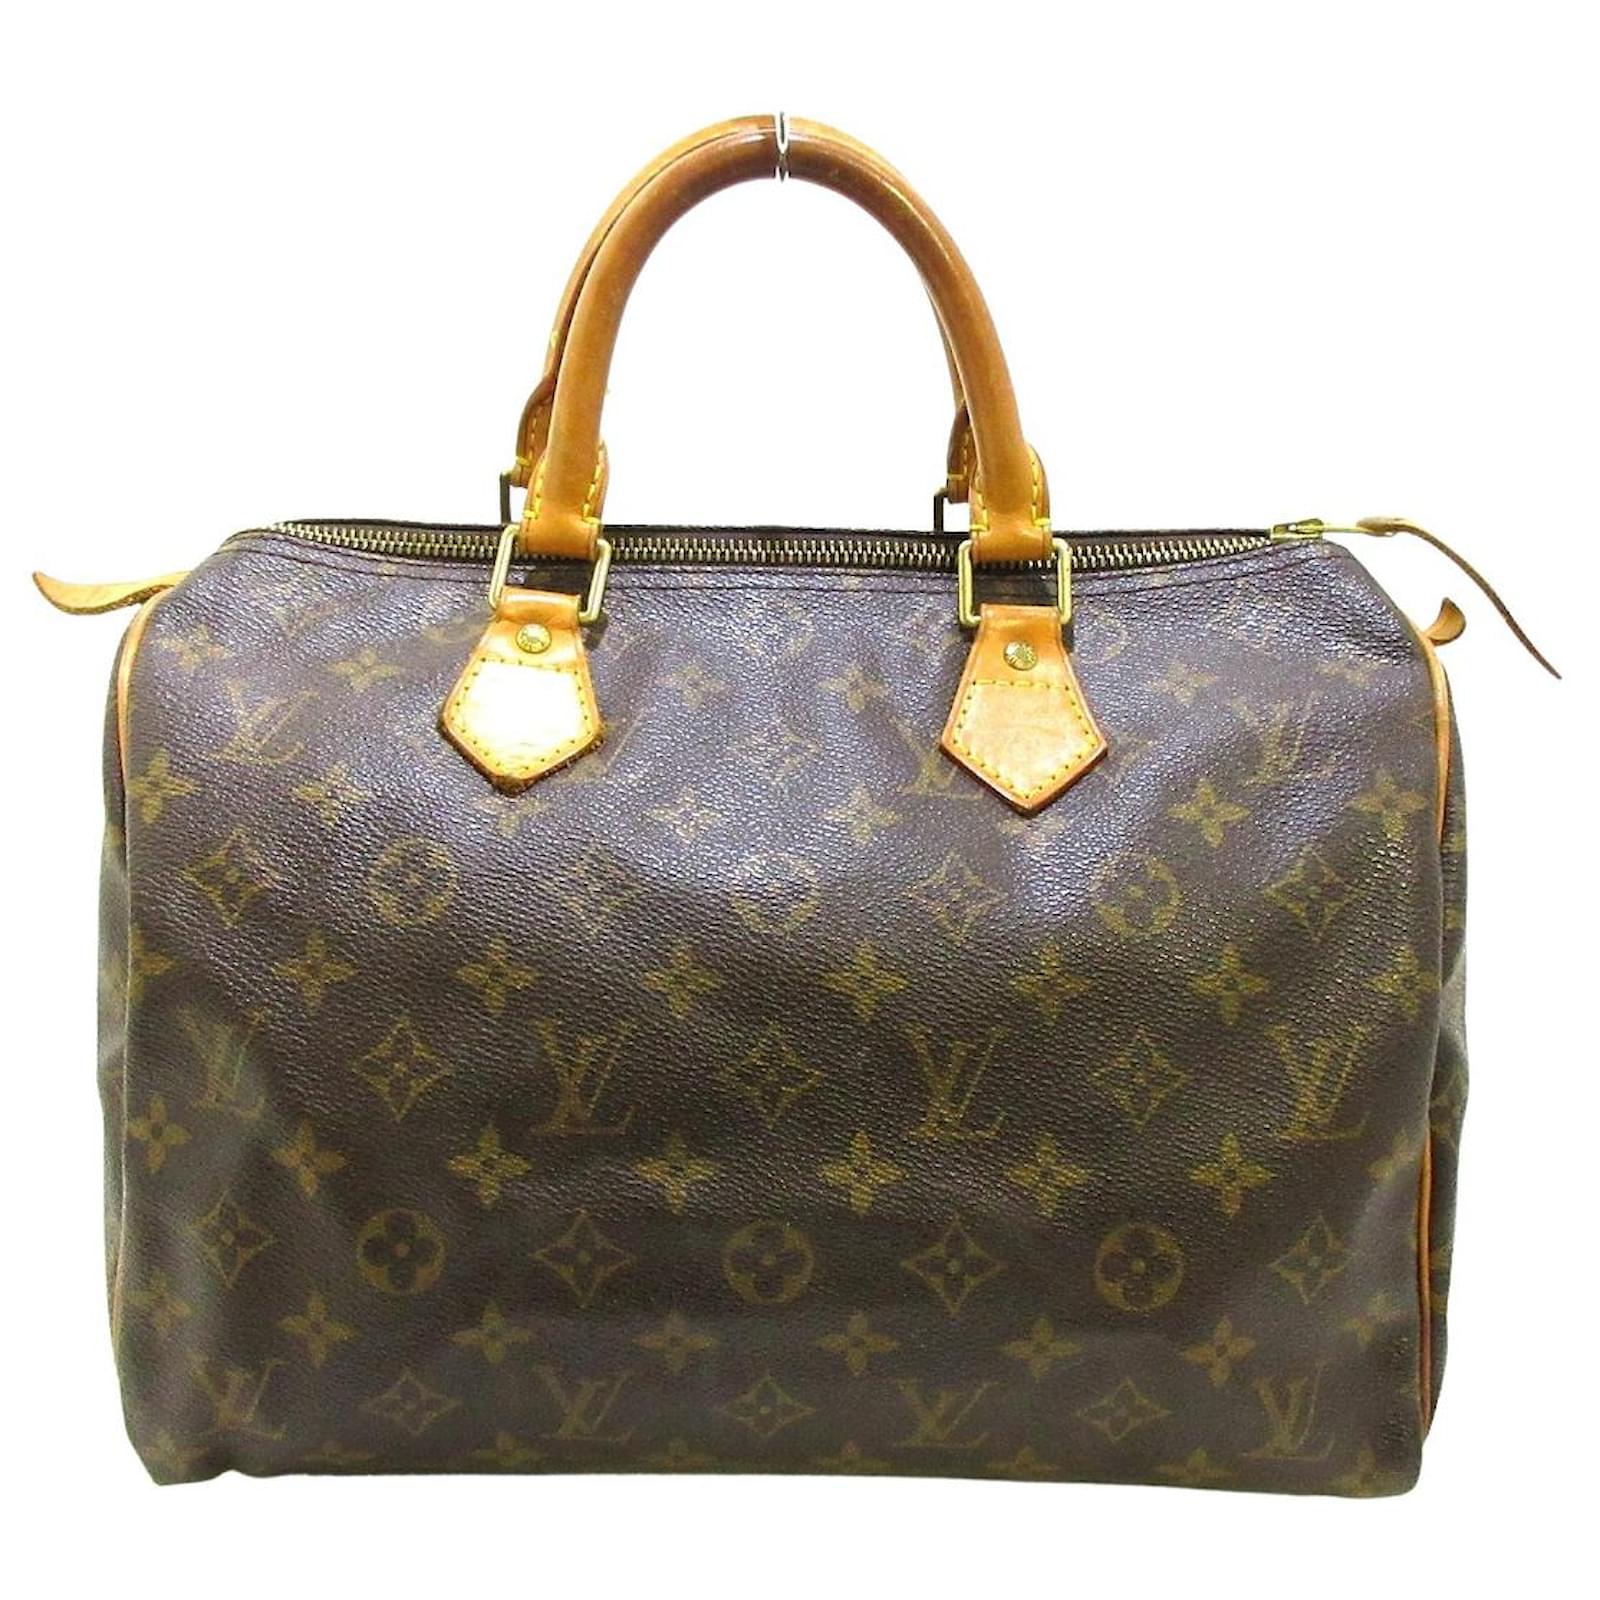 Gorgeous Authentic Louis Vuitton Perforated Monogram Speedy 30 wOrange Bag   eBay